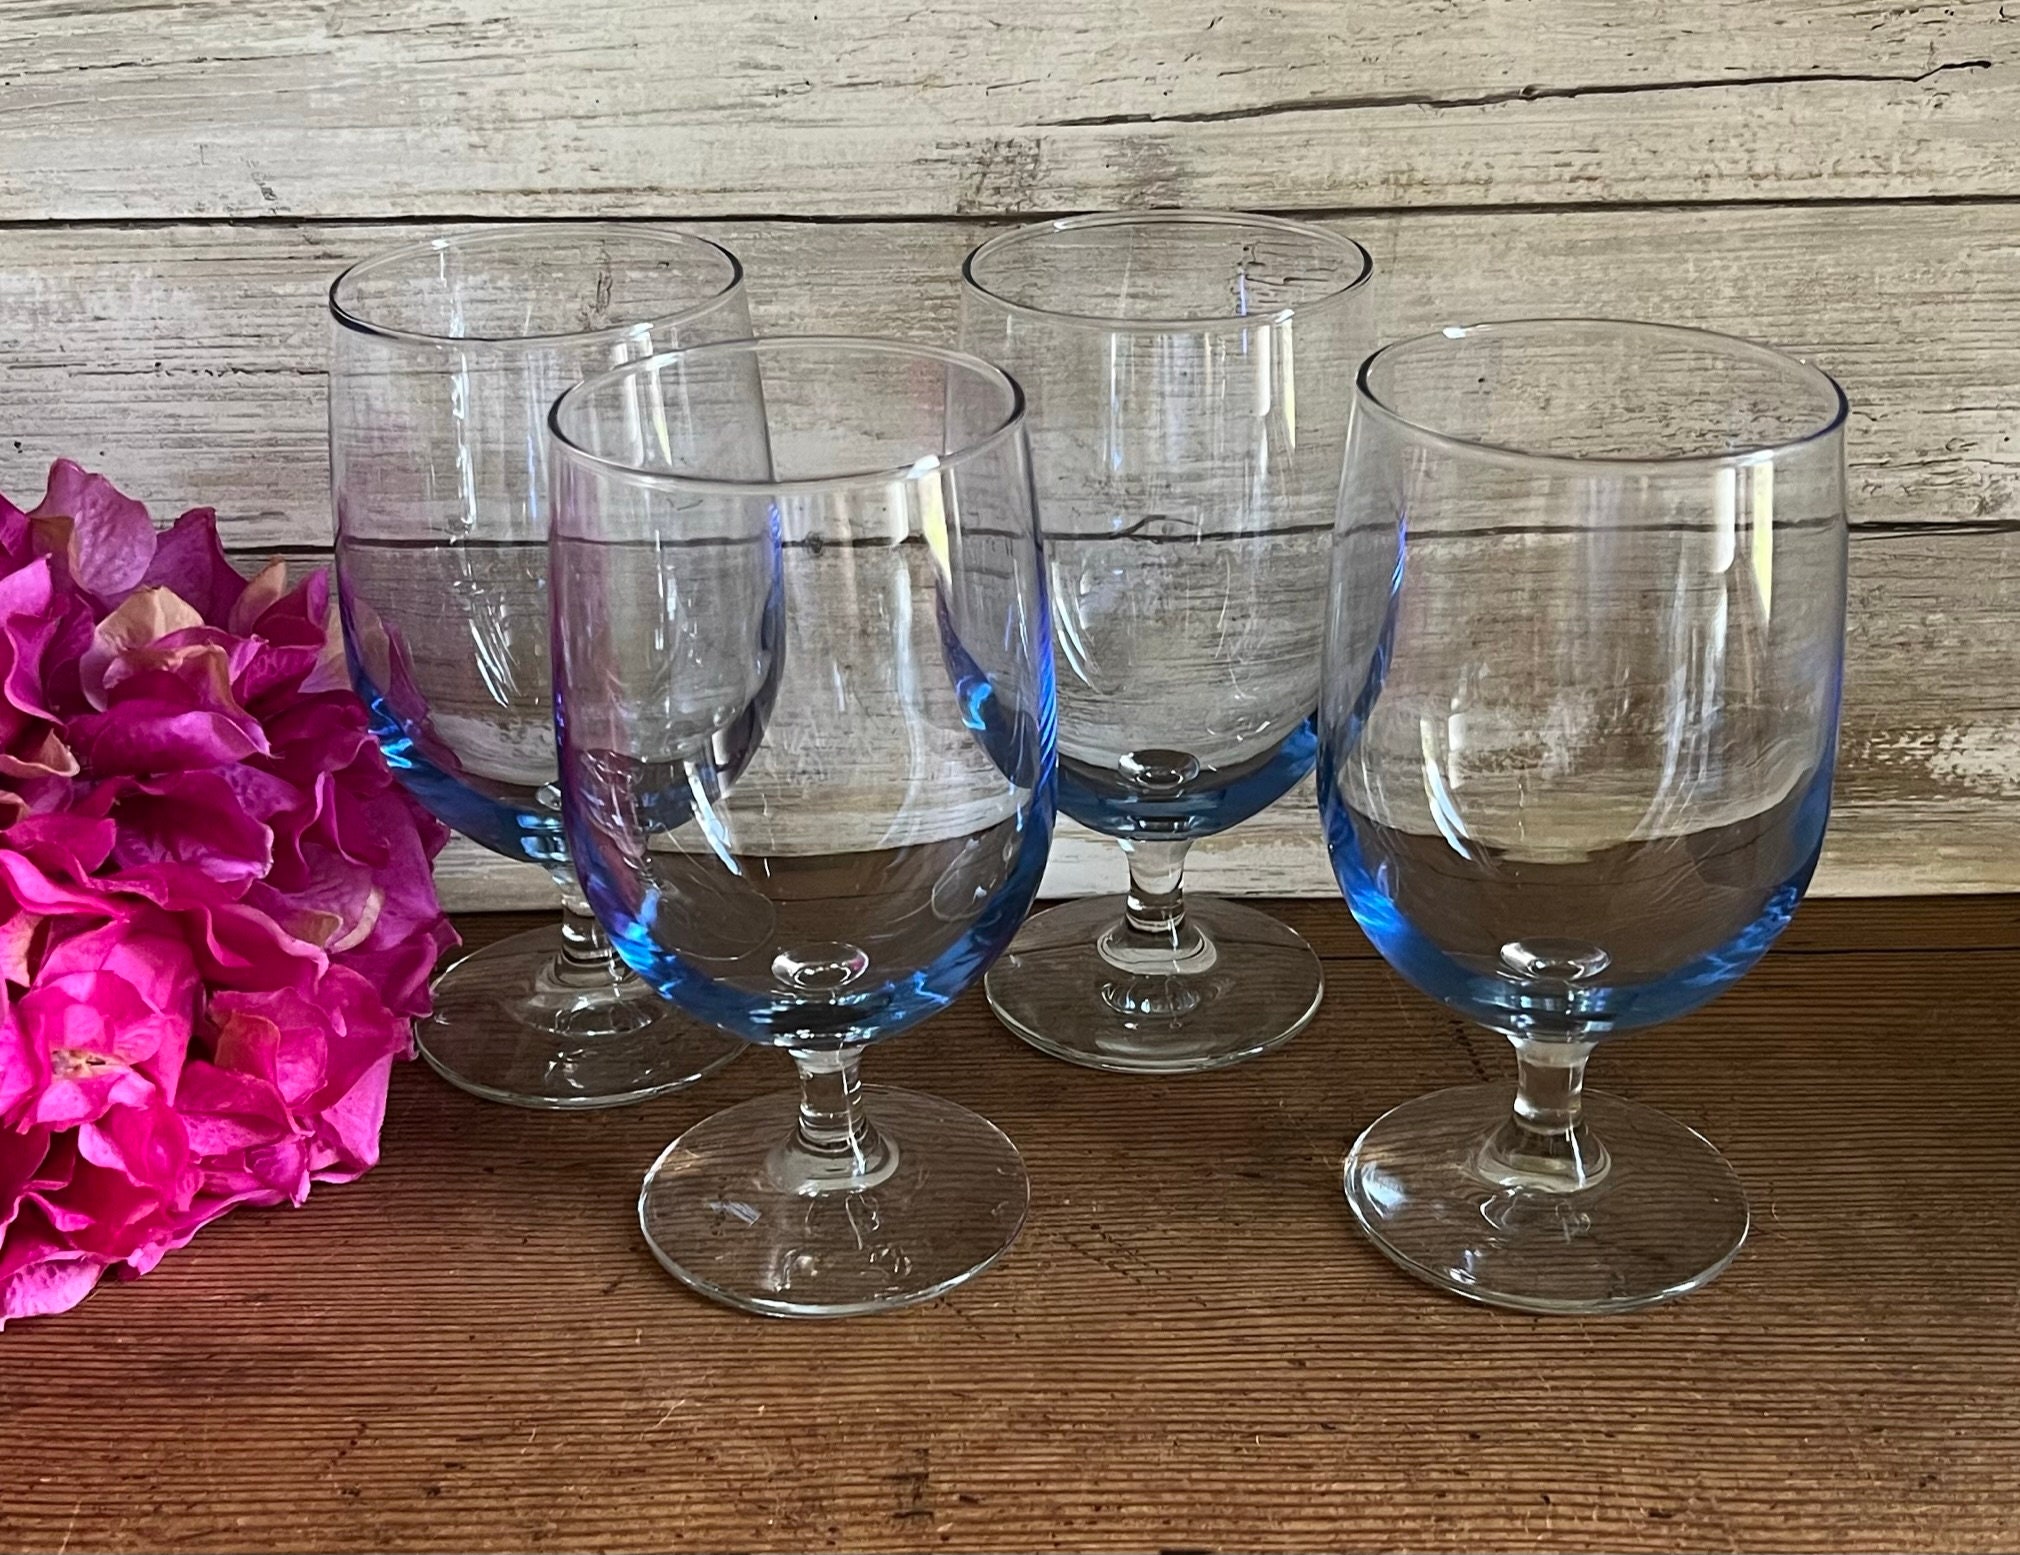 Libbey Montibello Misty Blue 16-ounce Iced Tea Glasses (Set of 12)